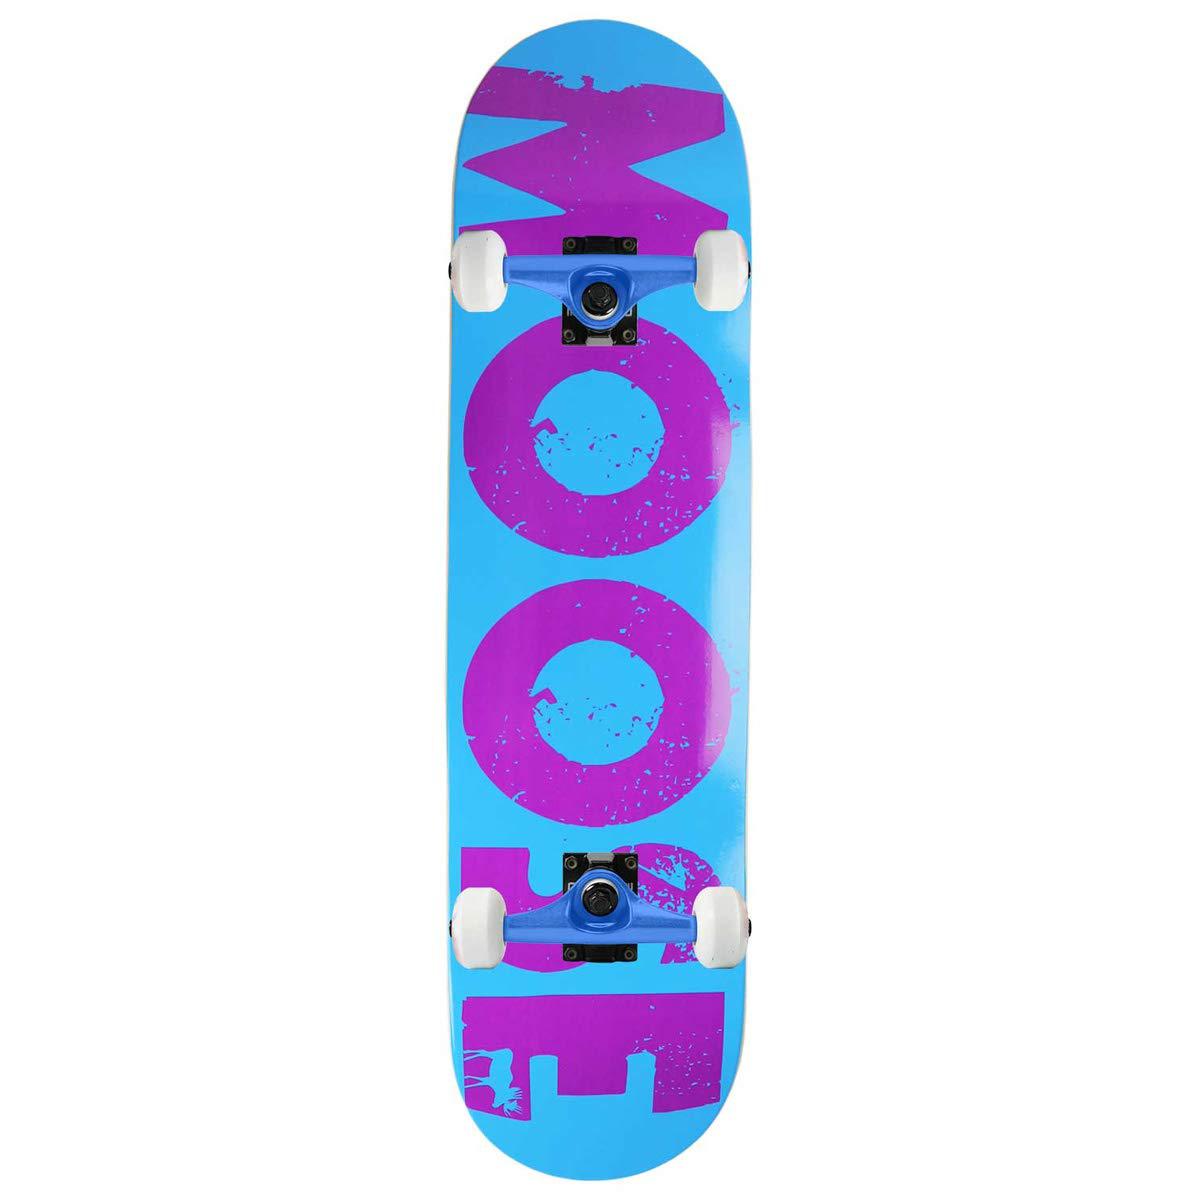 moose skateboard complete canadian maple bold logo blue 7.875"